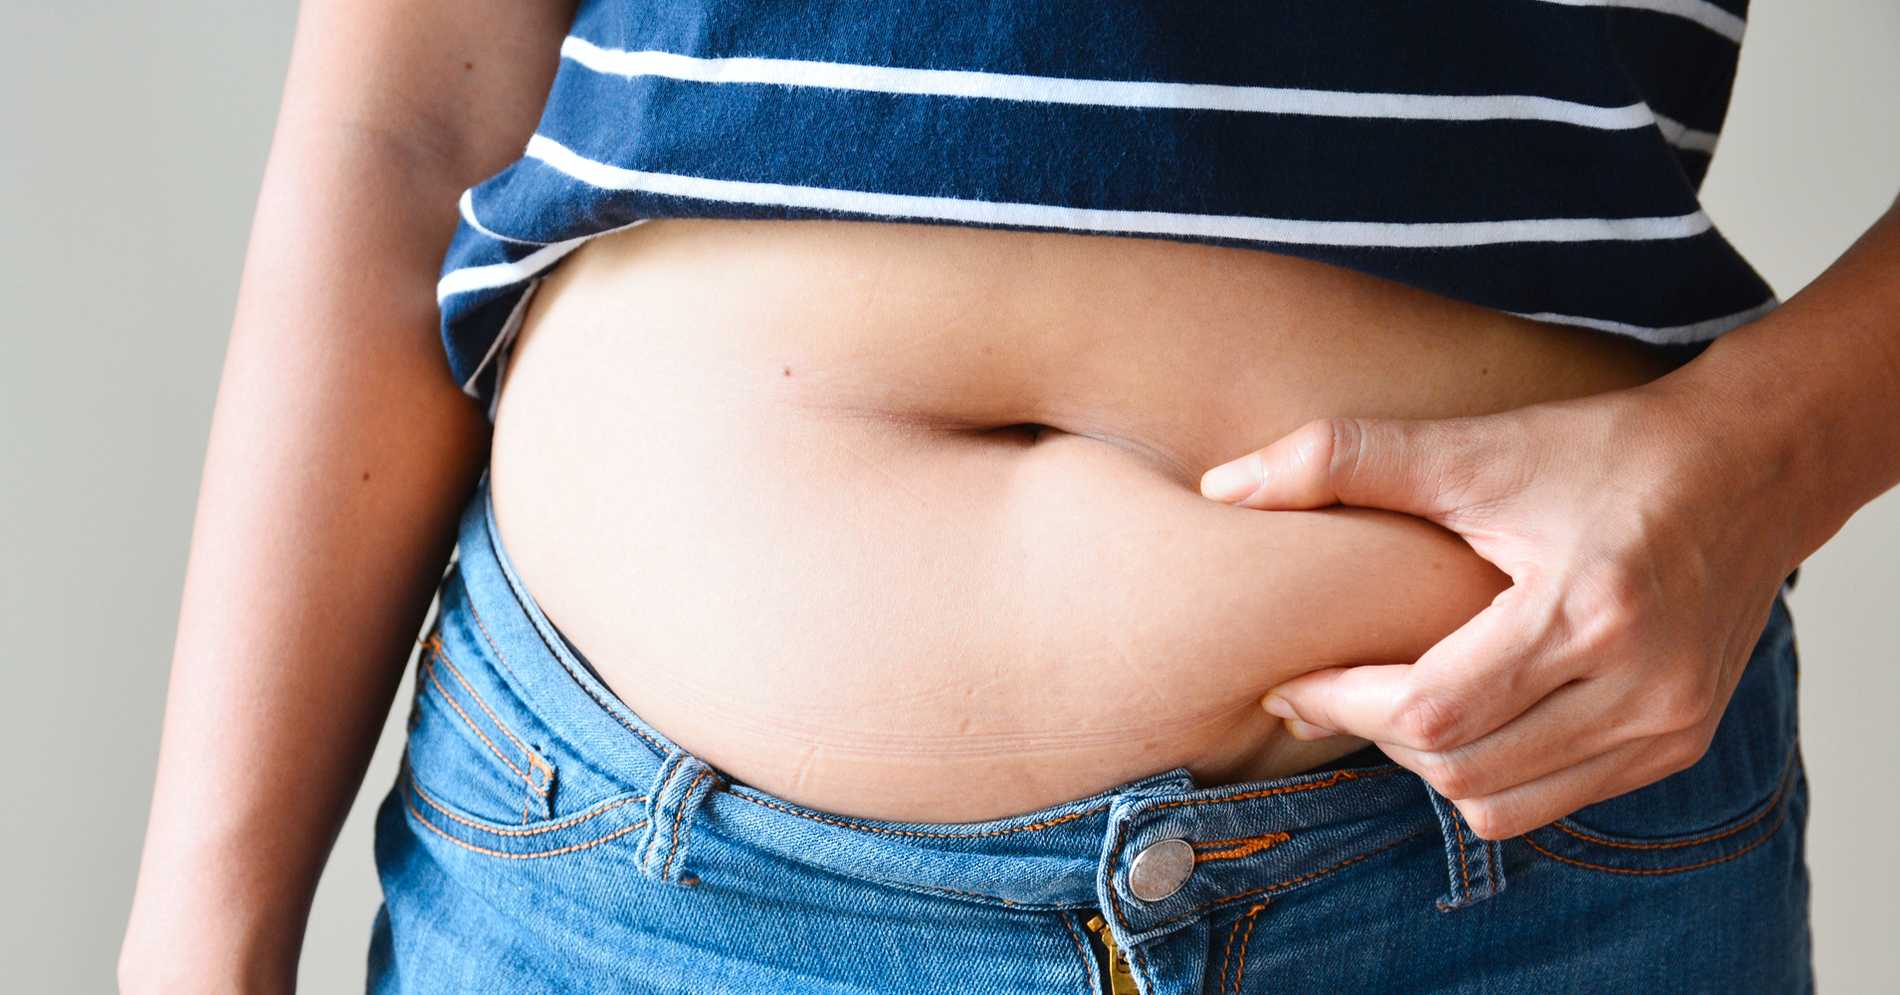 Så blir man av med fett på magen | Aftonbladet